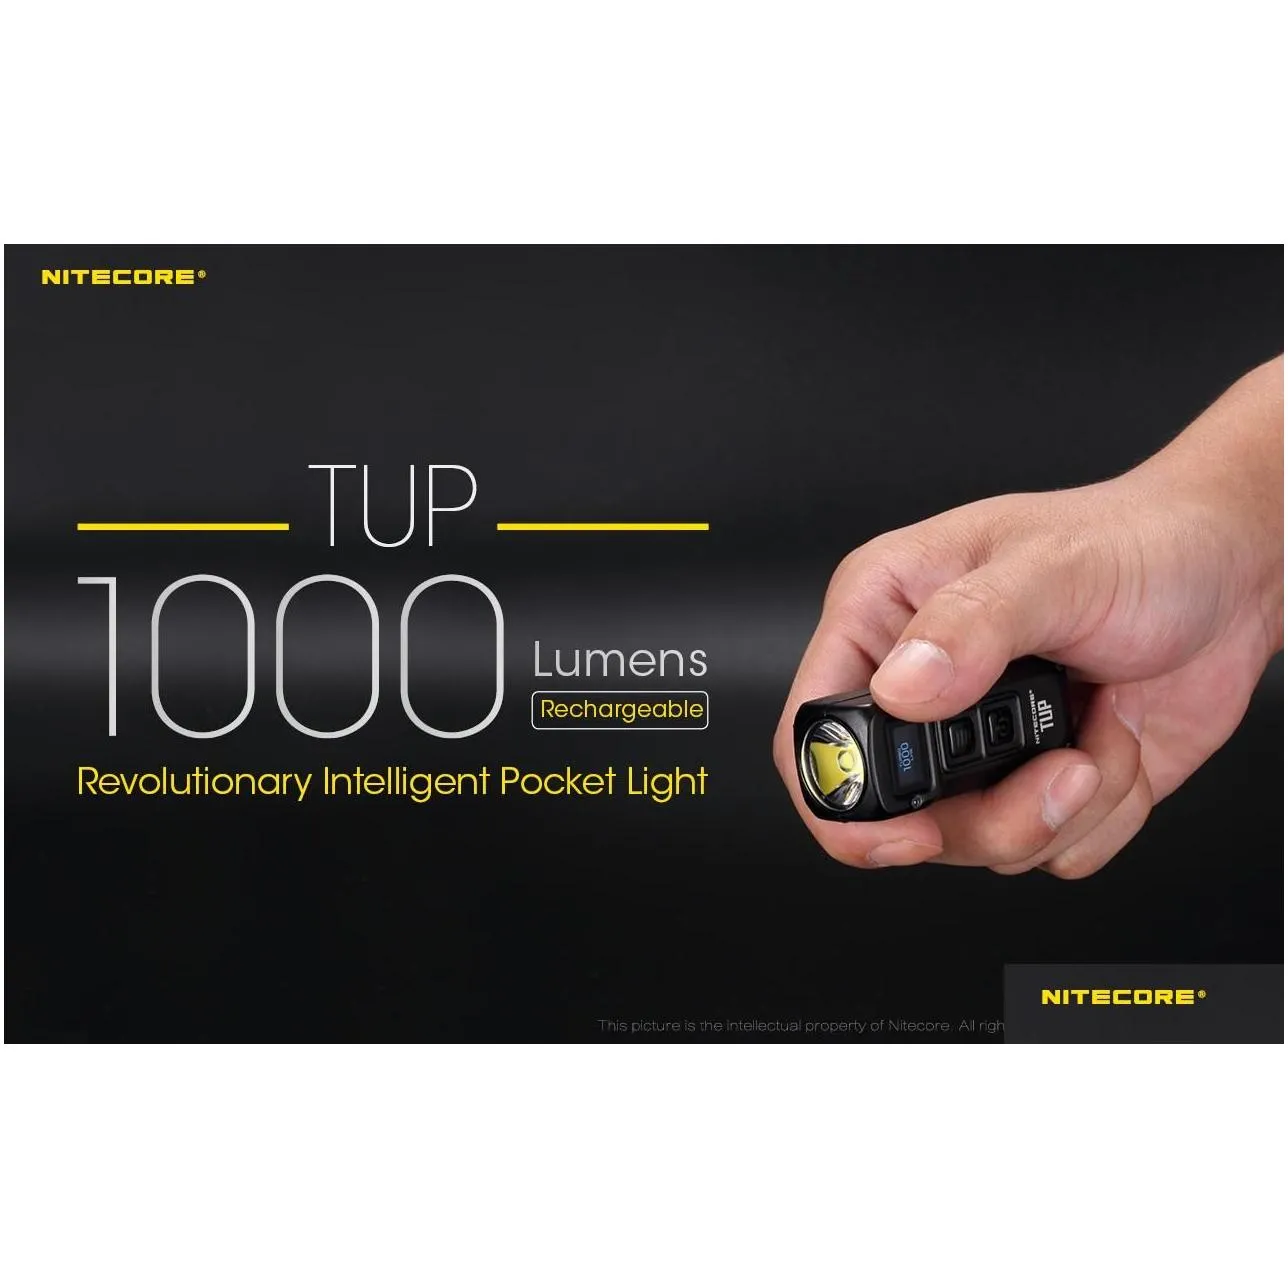 nitecore tup mini flashlight xp-l hd v6 max 1000 lm beam distance 180m revolutionary intelligent edc torch usb rechargeable9825194